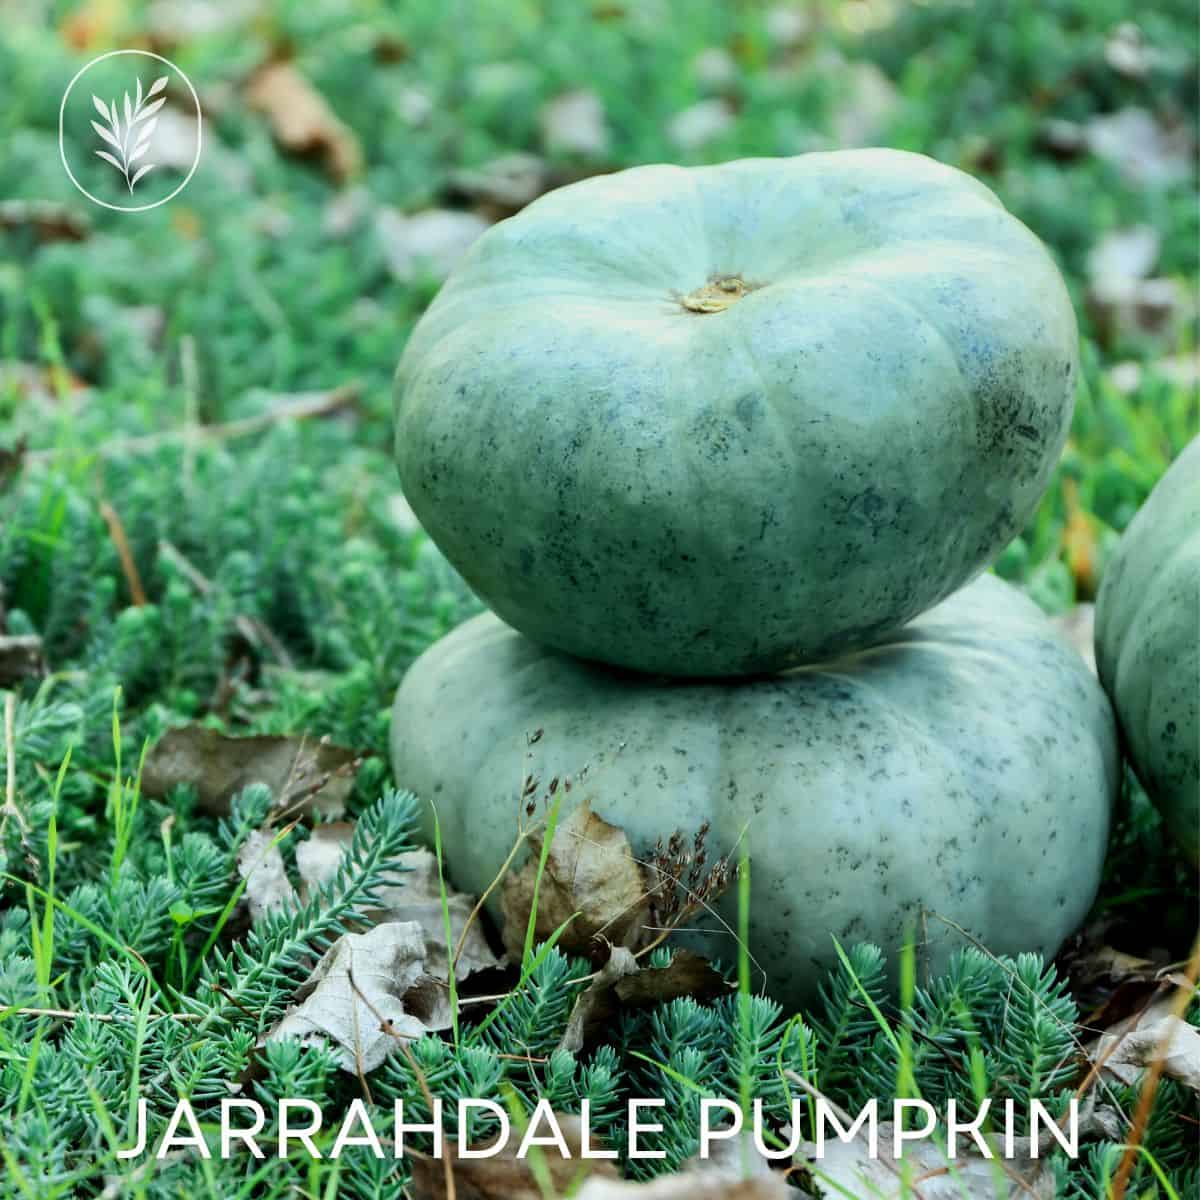 Jarrahdale pumpkin via @home4theharvest